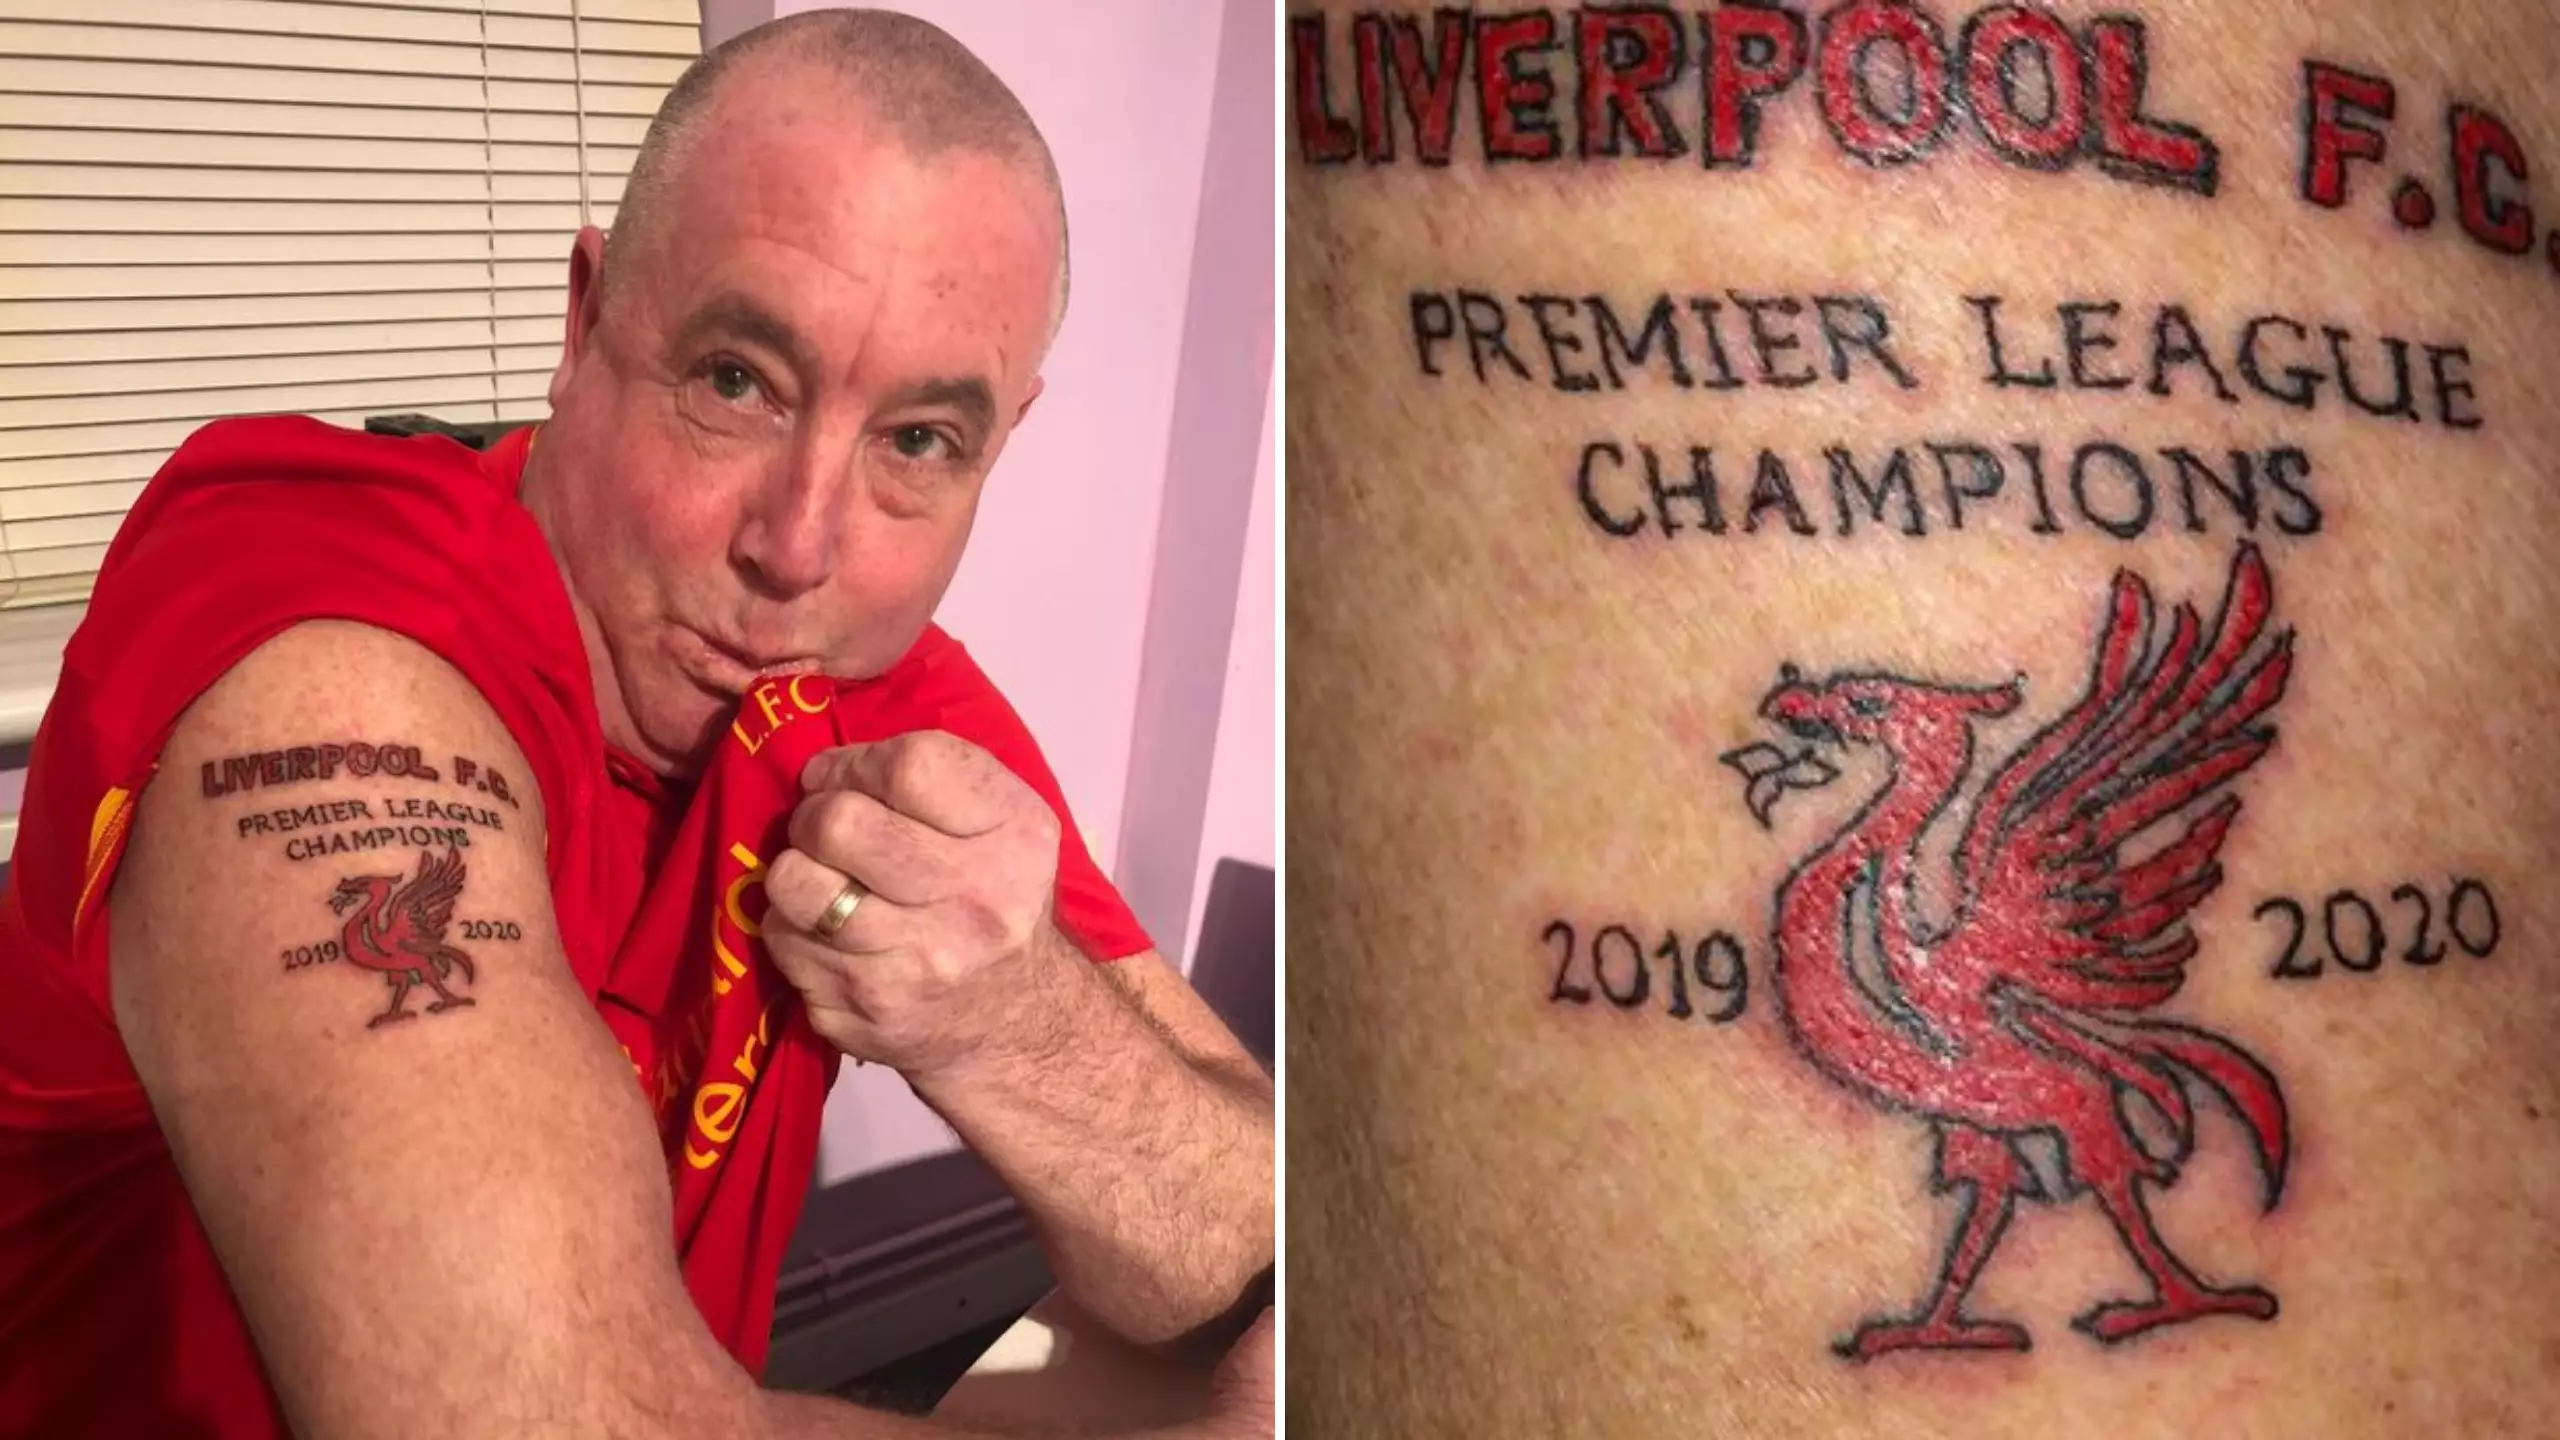 A Liverpool Fan Has Already Got A 'Premier League Champions 2019/20' Tattoo